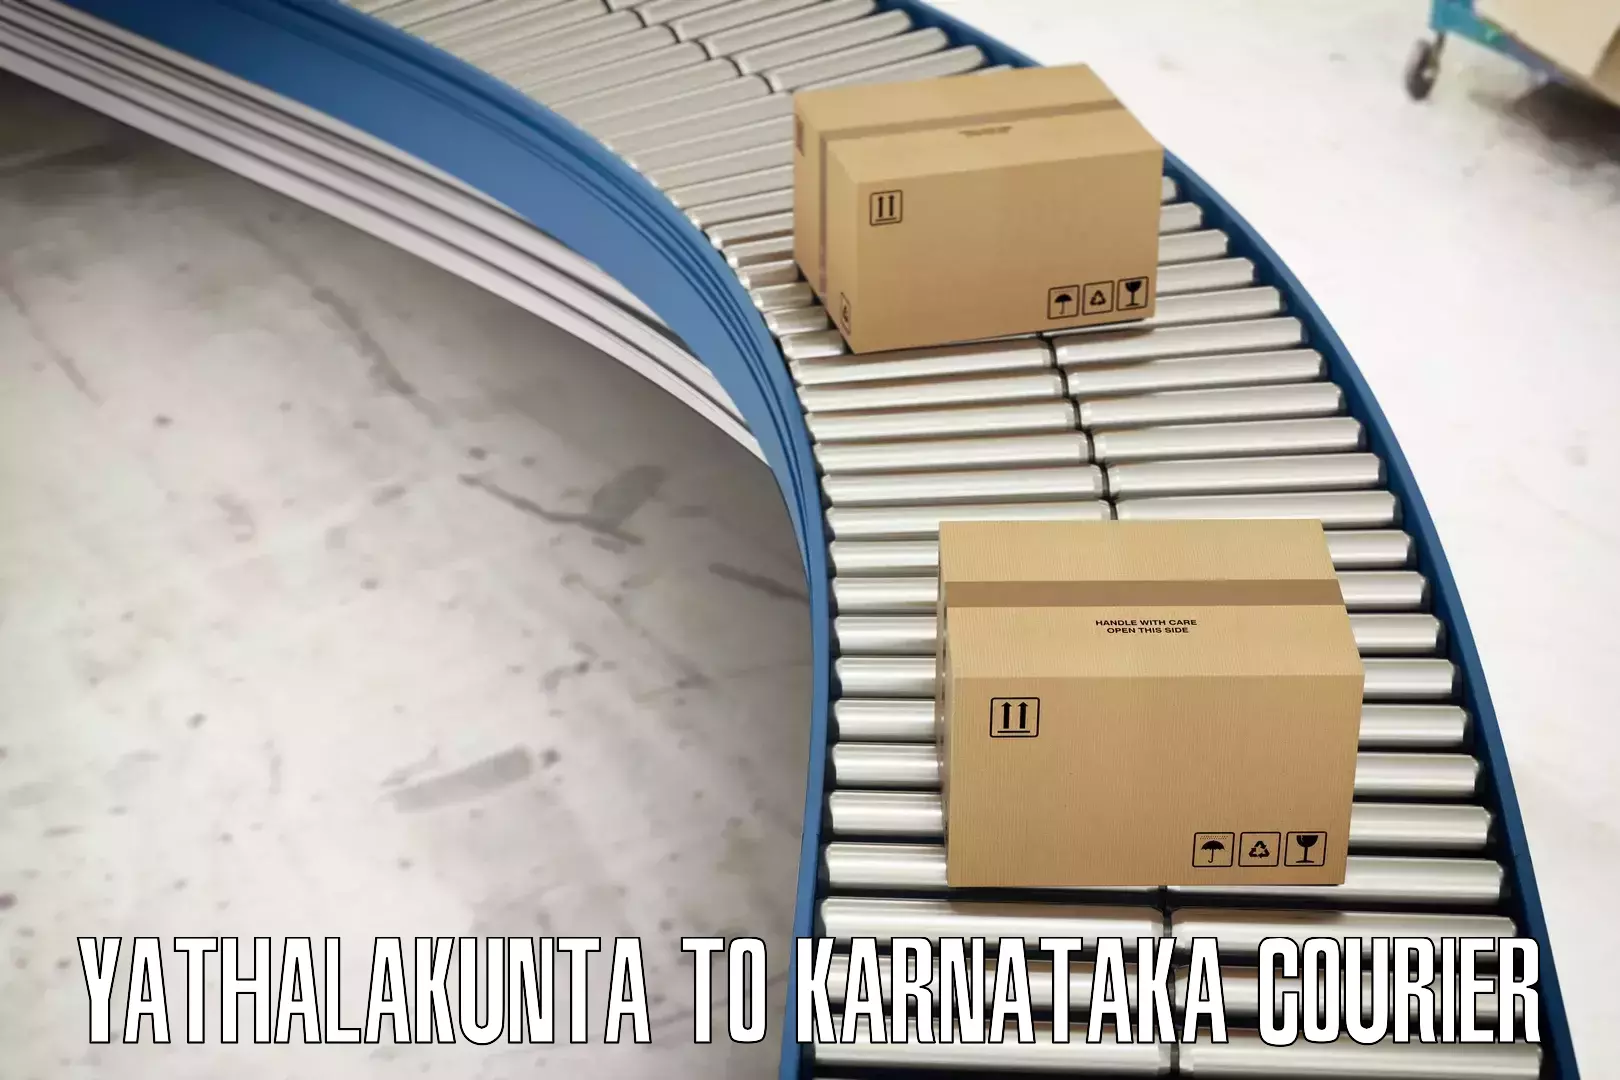 International parcel service Yathalakunta to Surathkal